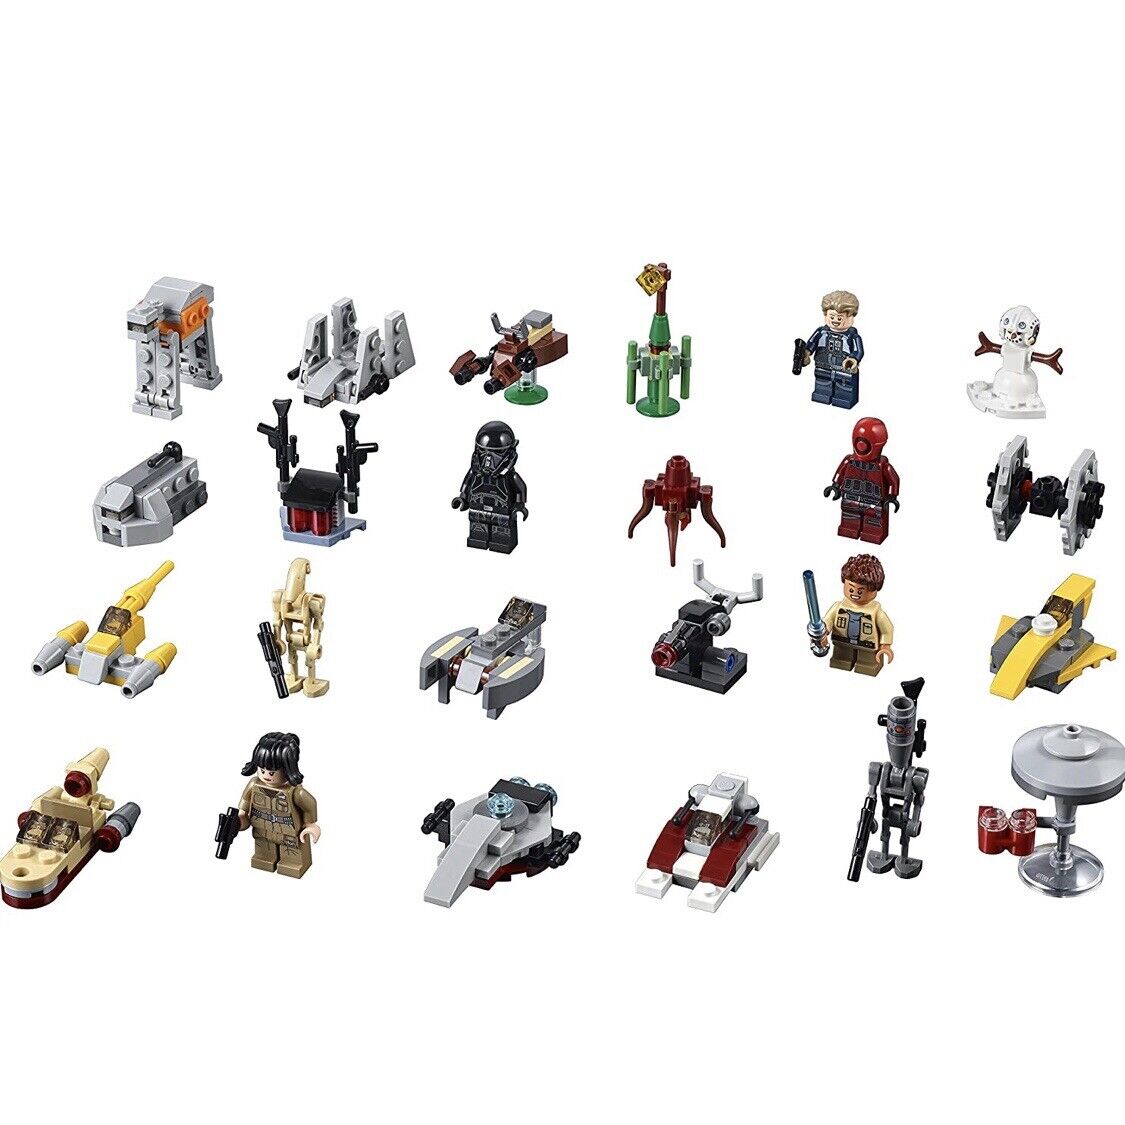 Lego Star Wars - 75213 - Calendrier de l'Avent - NEUF SCELLÉ